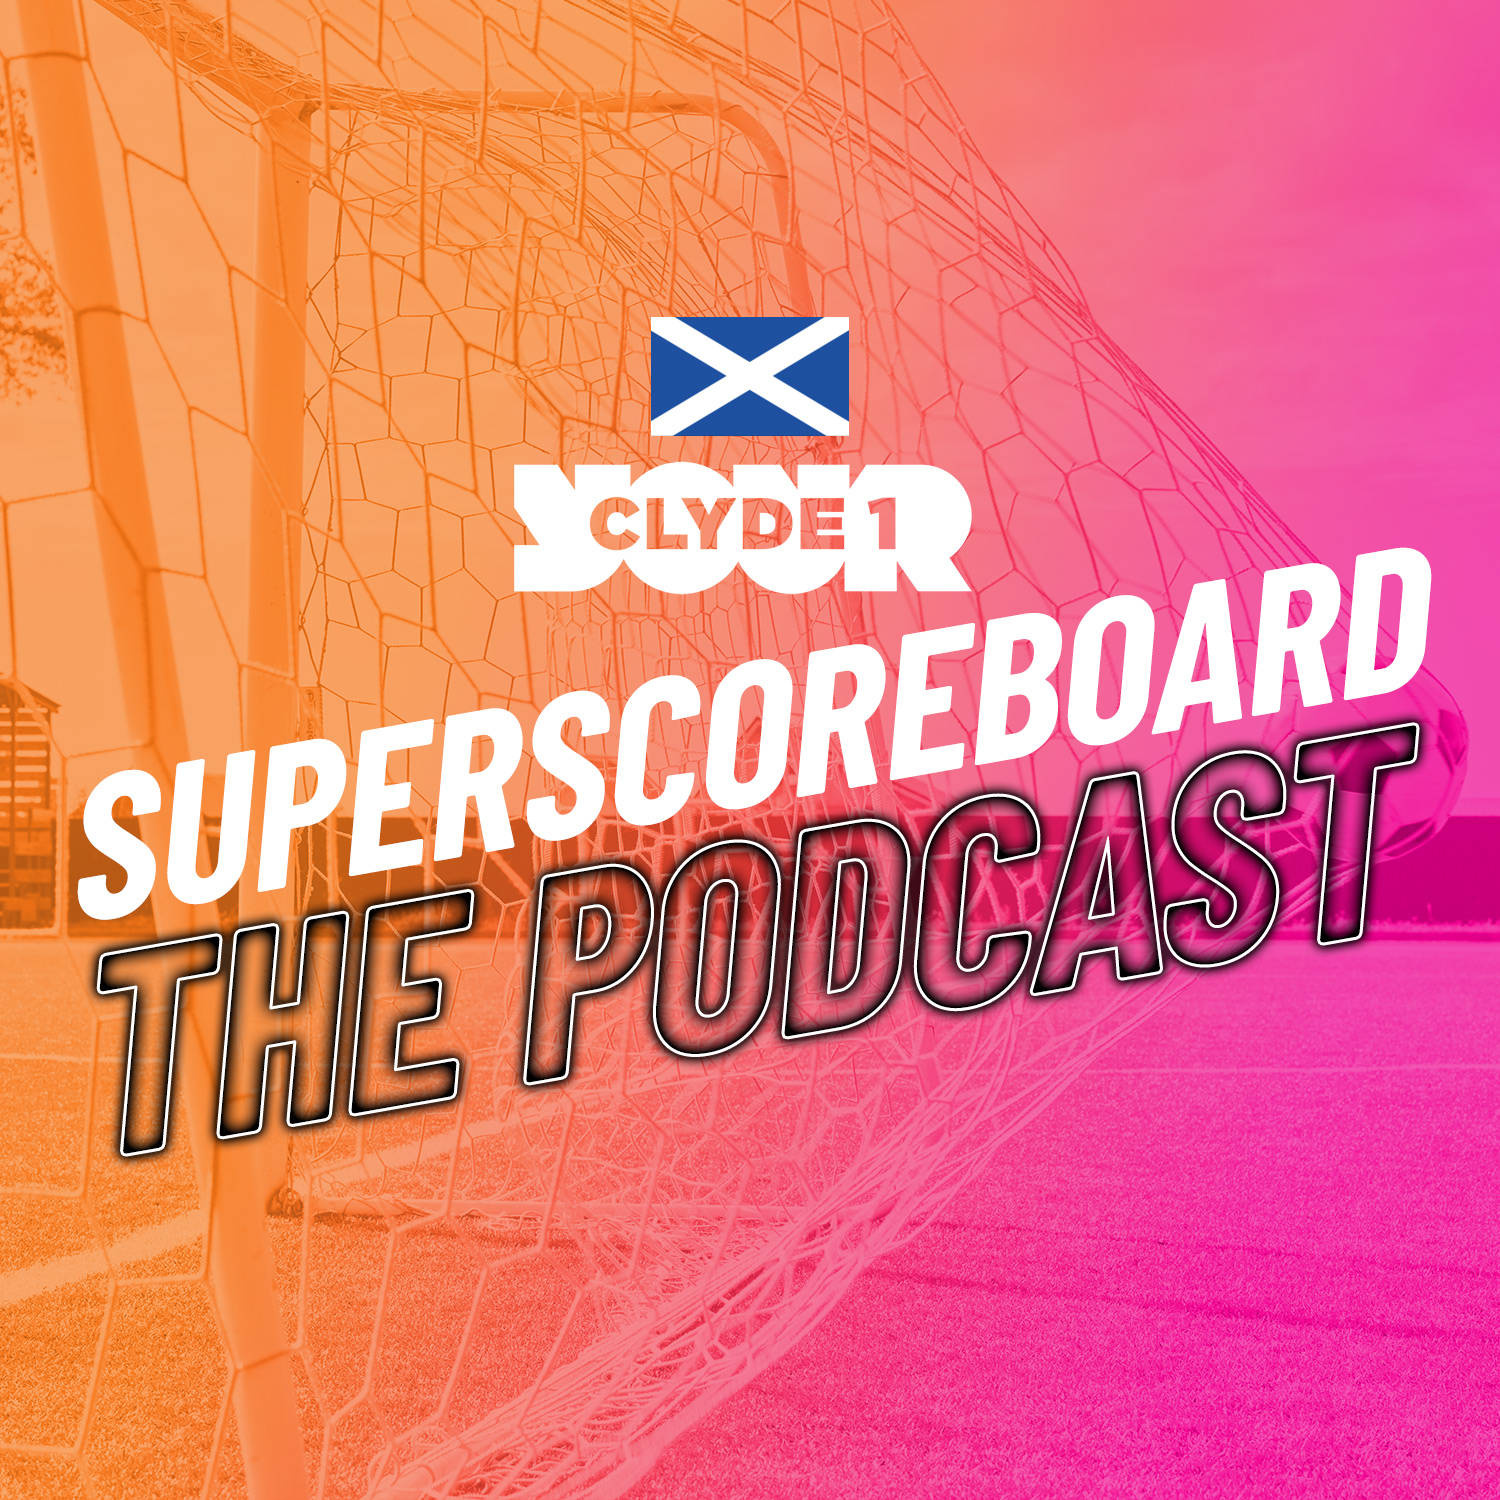 Wednesday 13th December Clyde 1 Superscoreboard